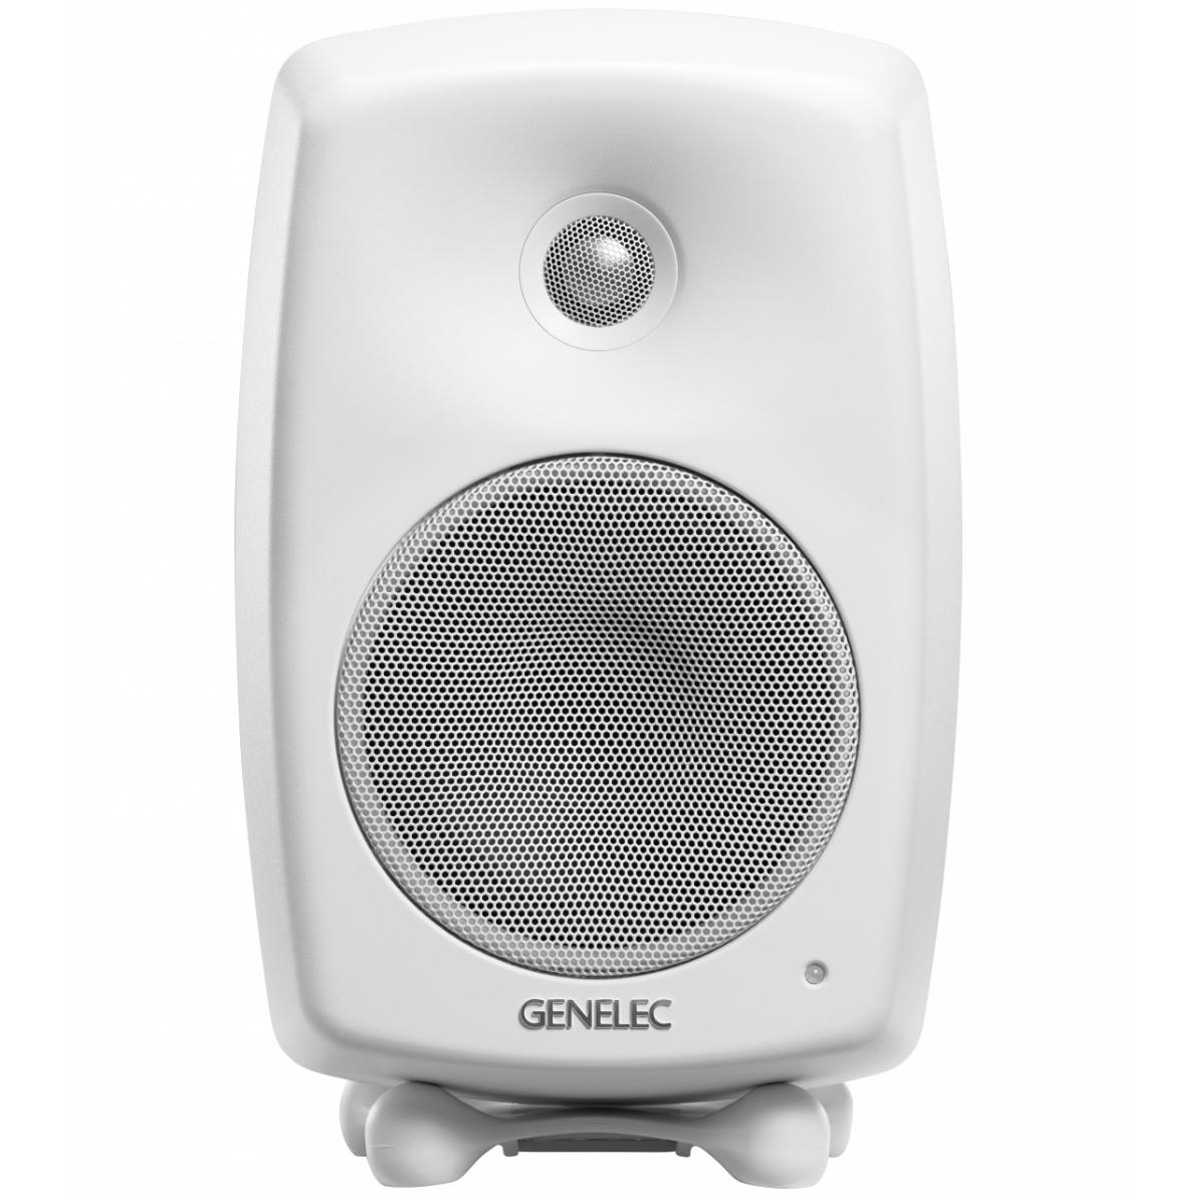 GENELEC ジェネレック / G Three ホワイト (1本) Home Audio Systems【お取り寄せ商品】